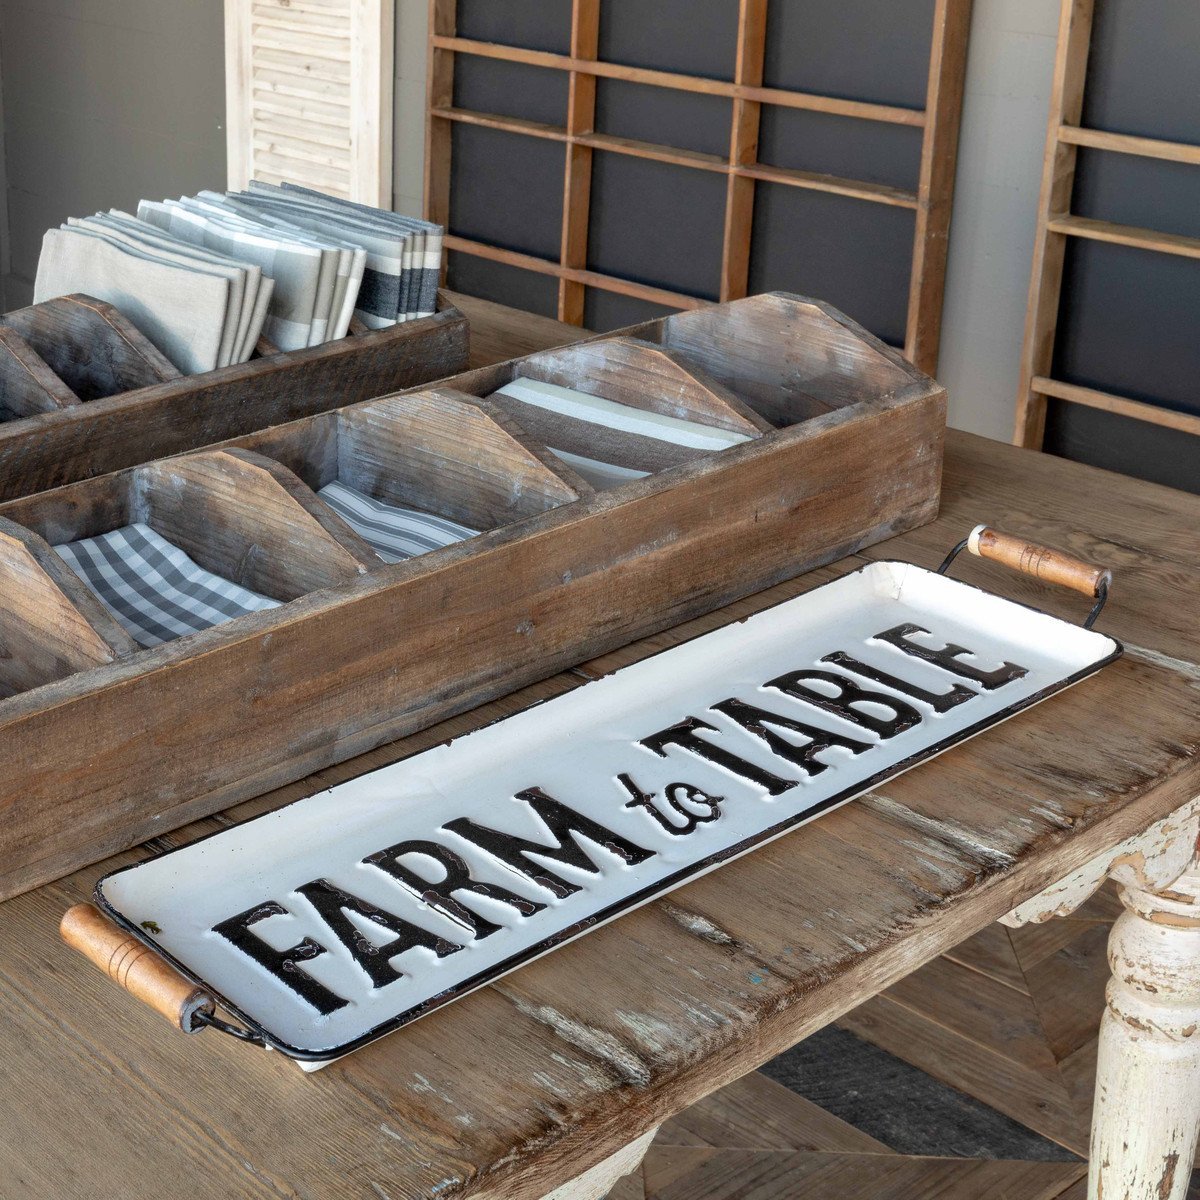 Farm To Table Metal Tray